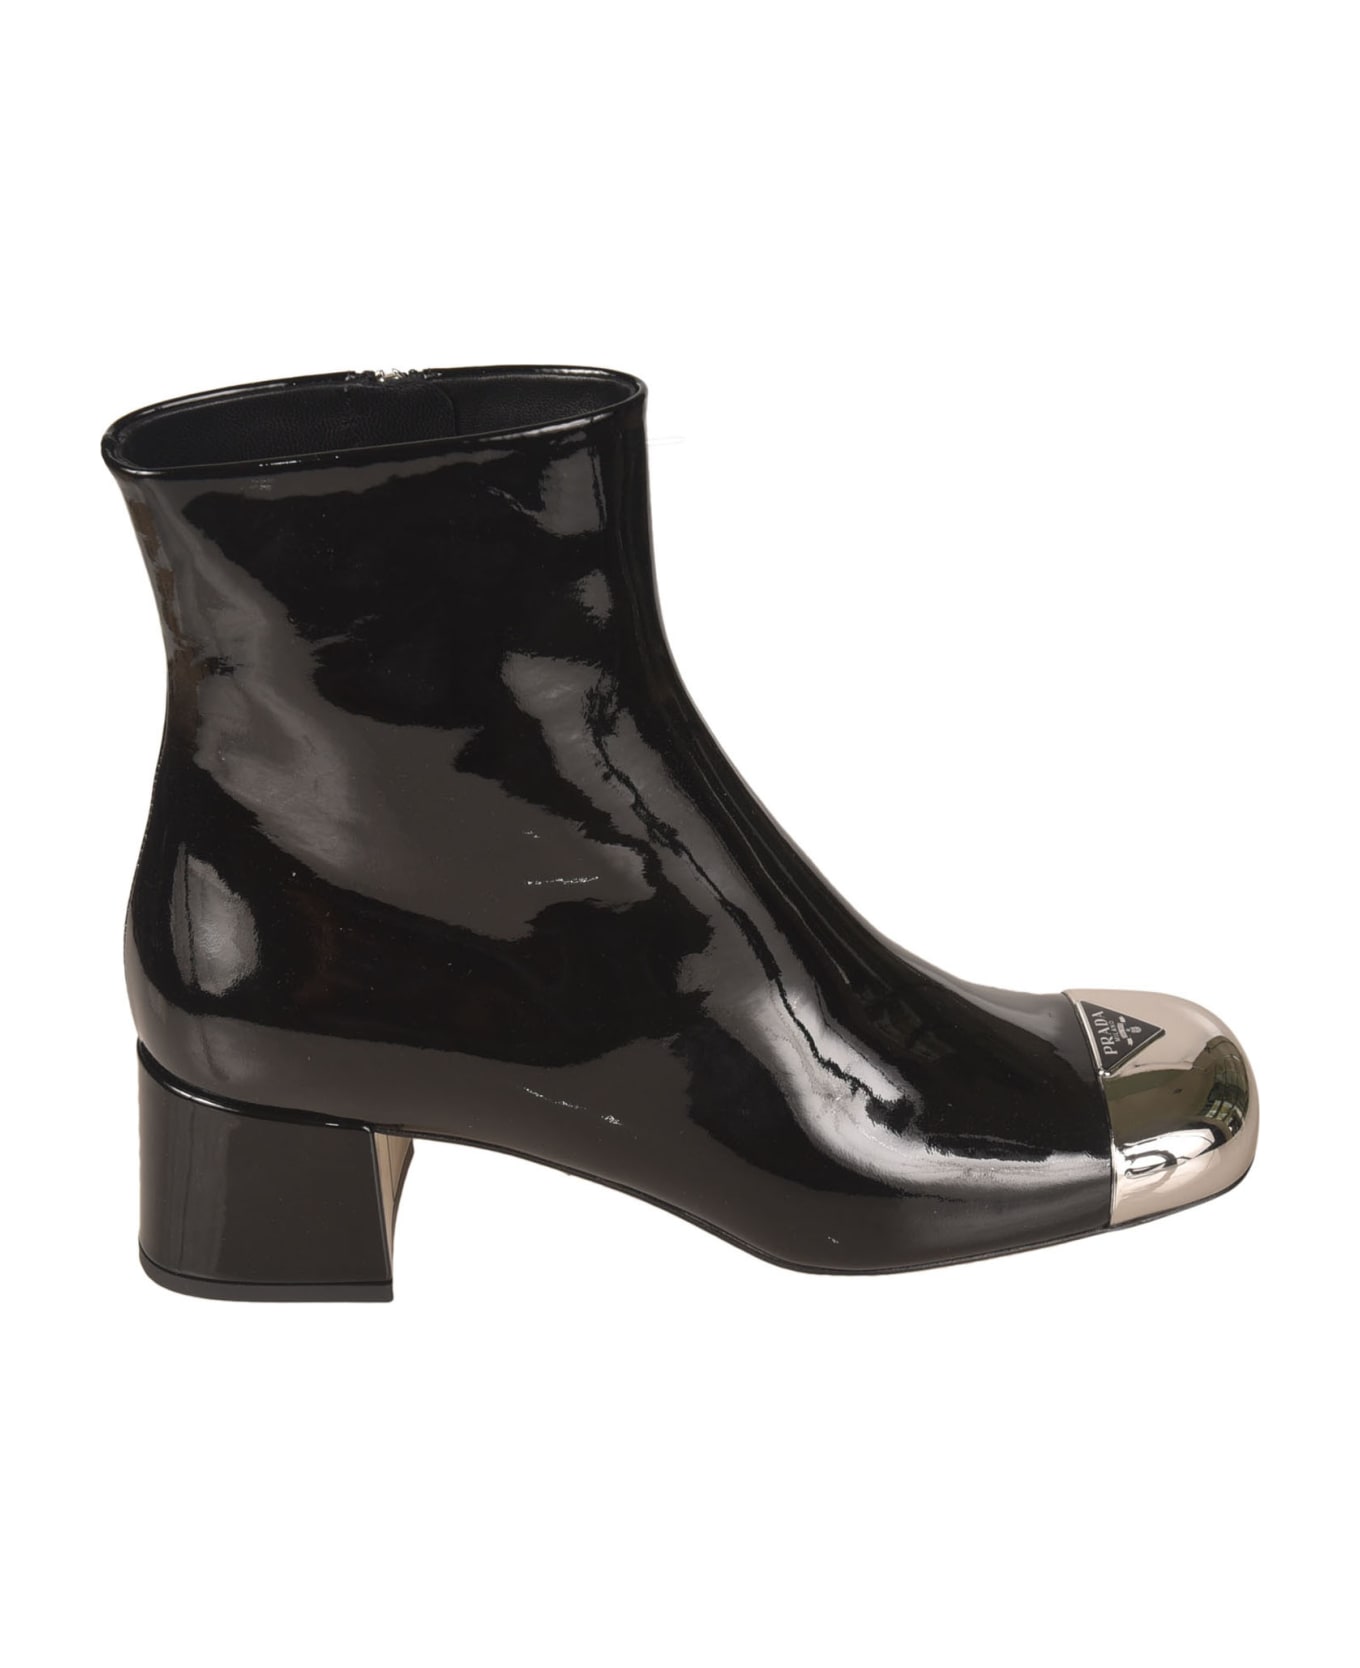 Prada Metallic Toe Boots - Nero